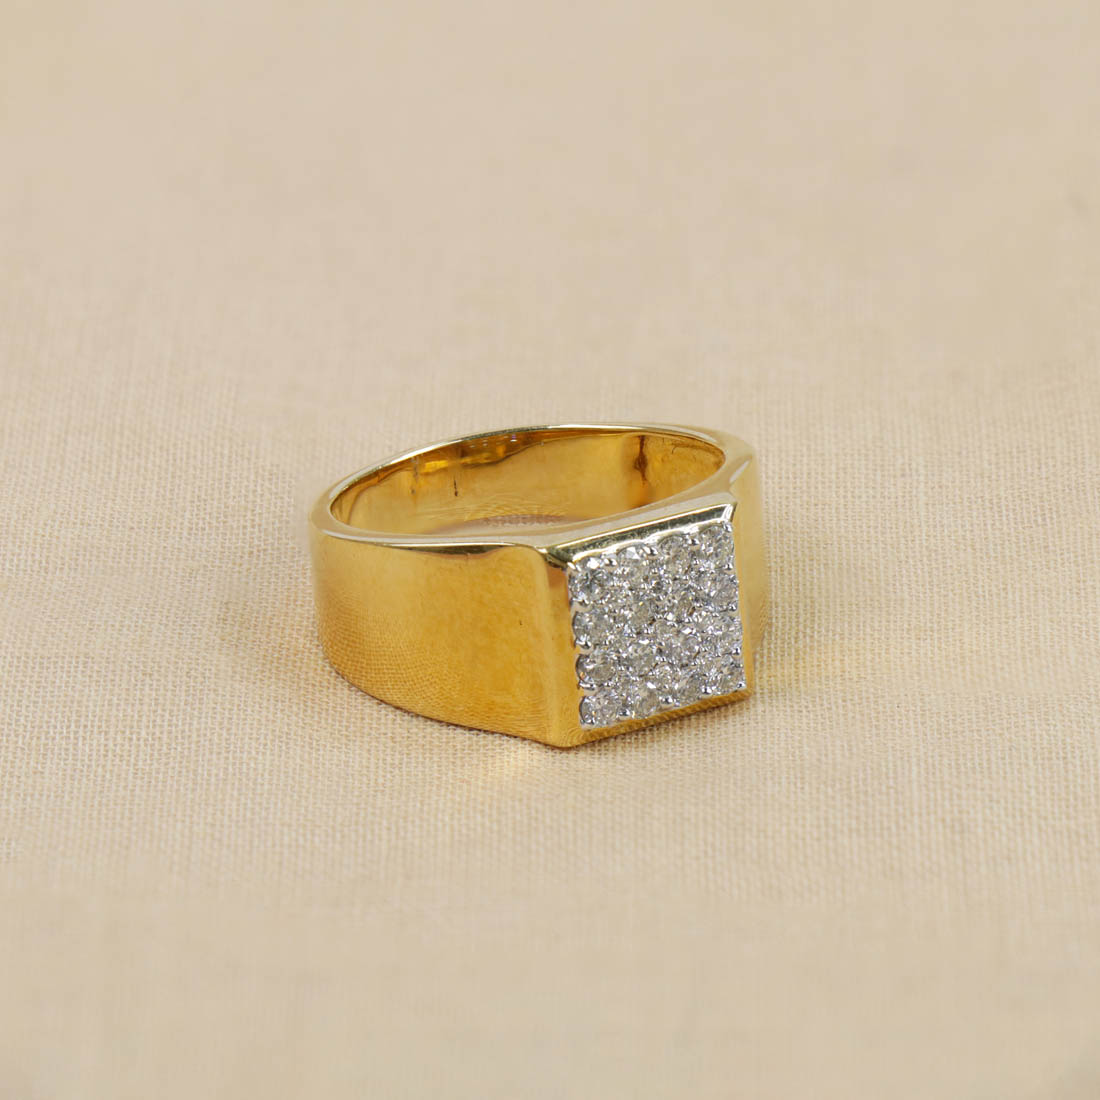 Bridal Jewelry Sets Round Modern And Stylish Men Gold Fashionable Diamond  Ring at 60000.00 INR in Amravati | Ambika Jewellers